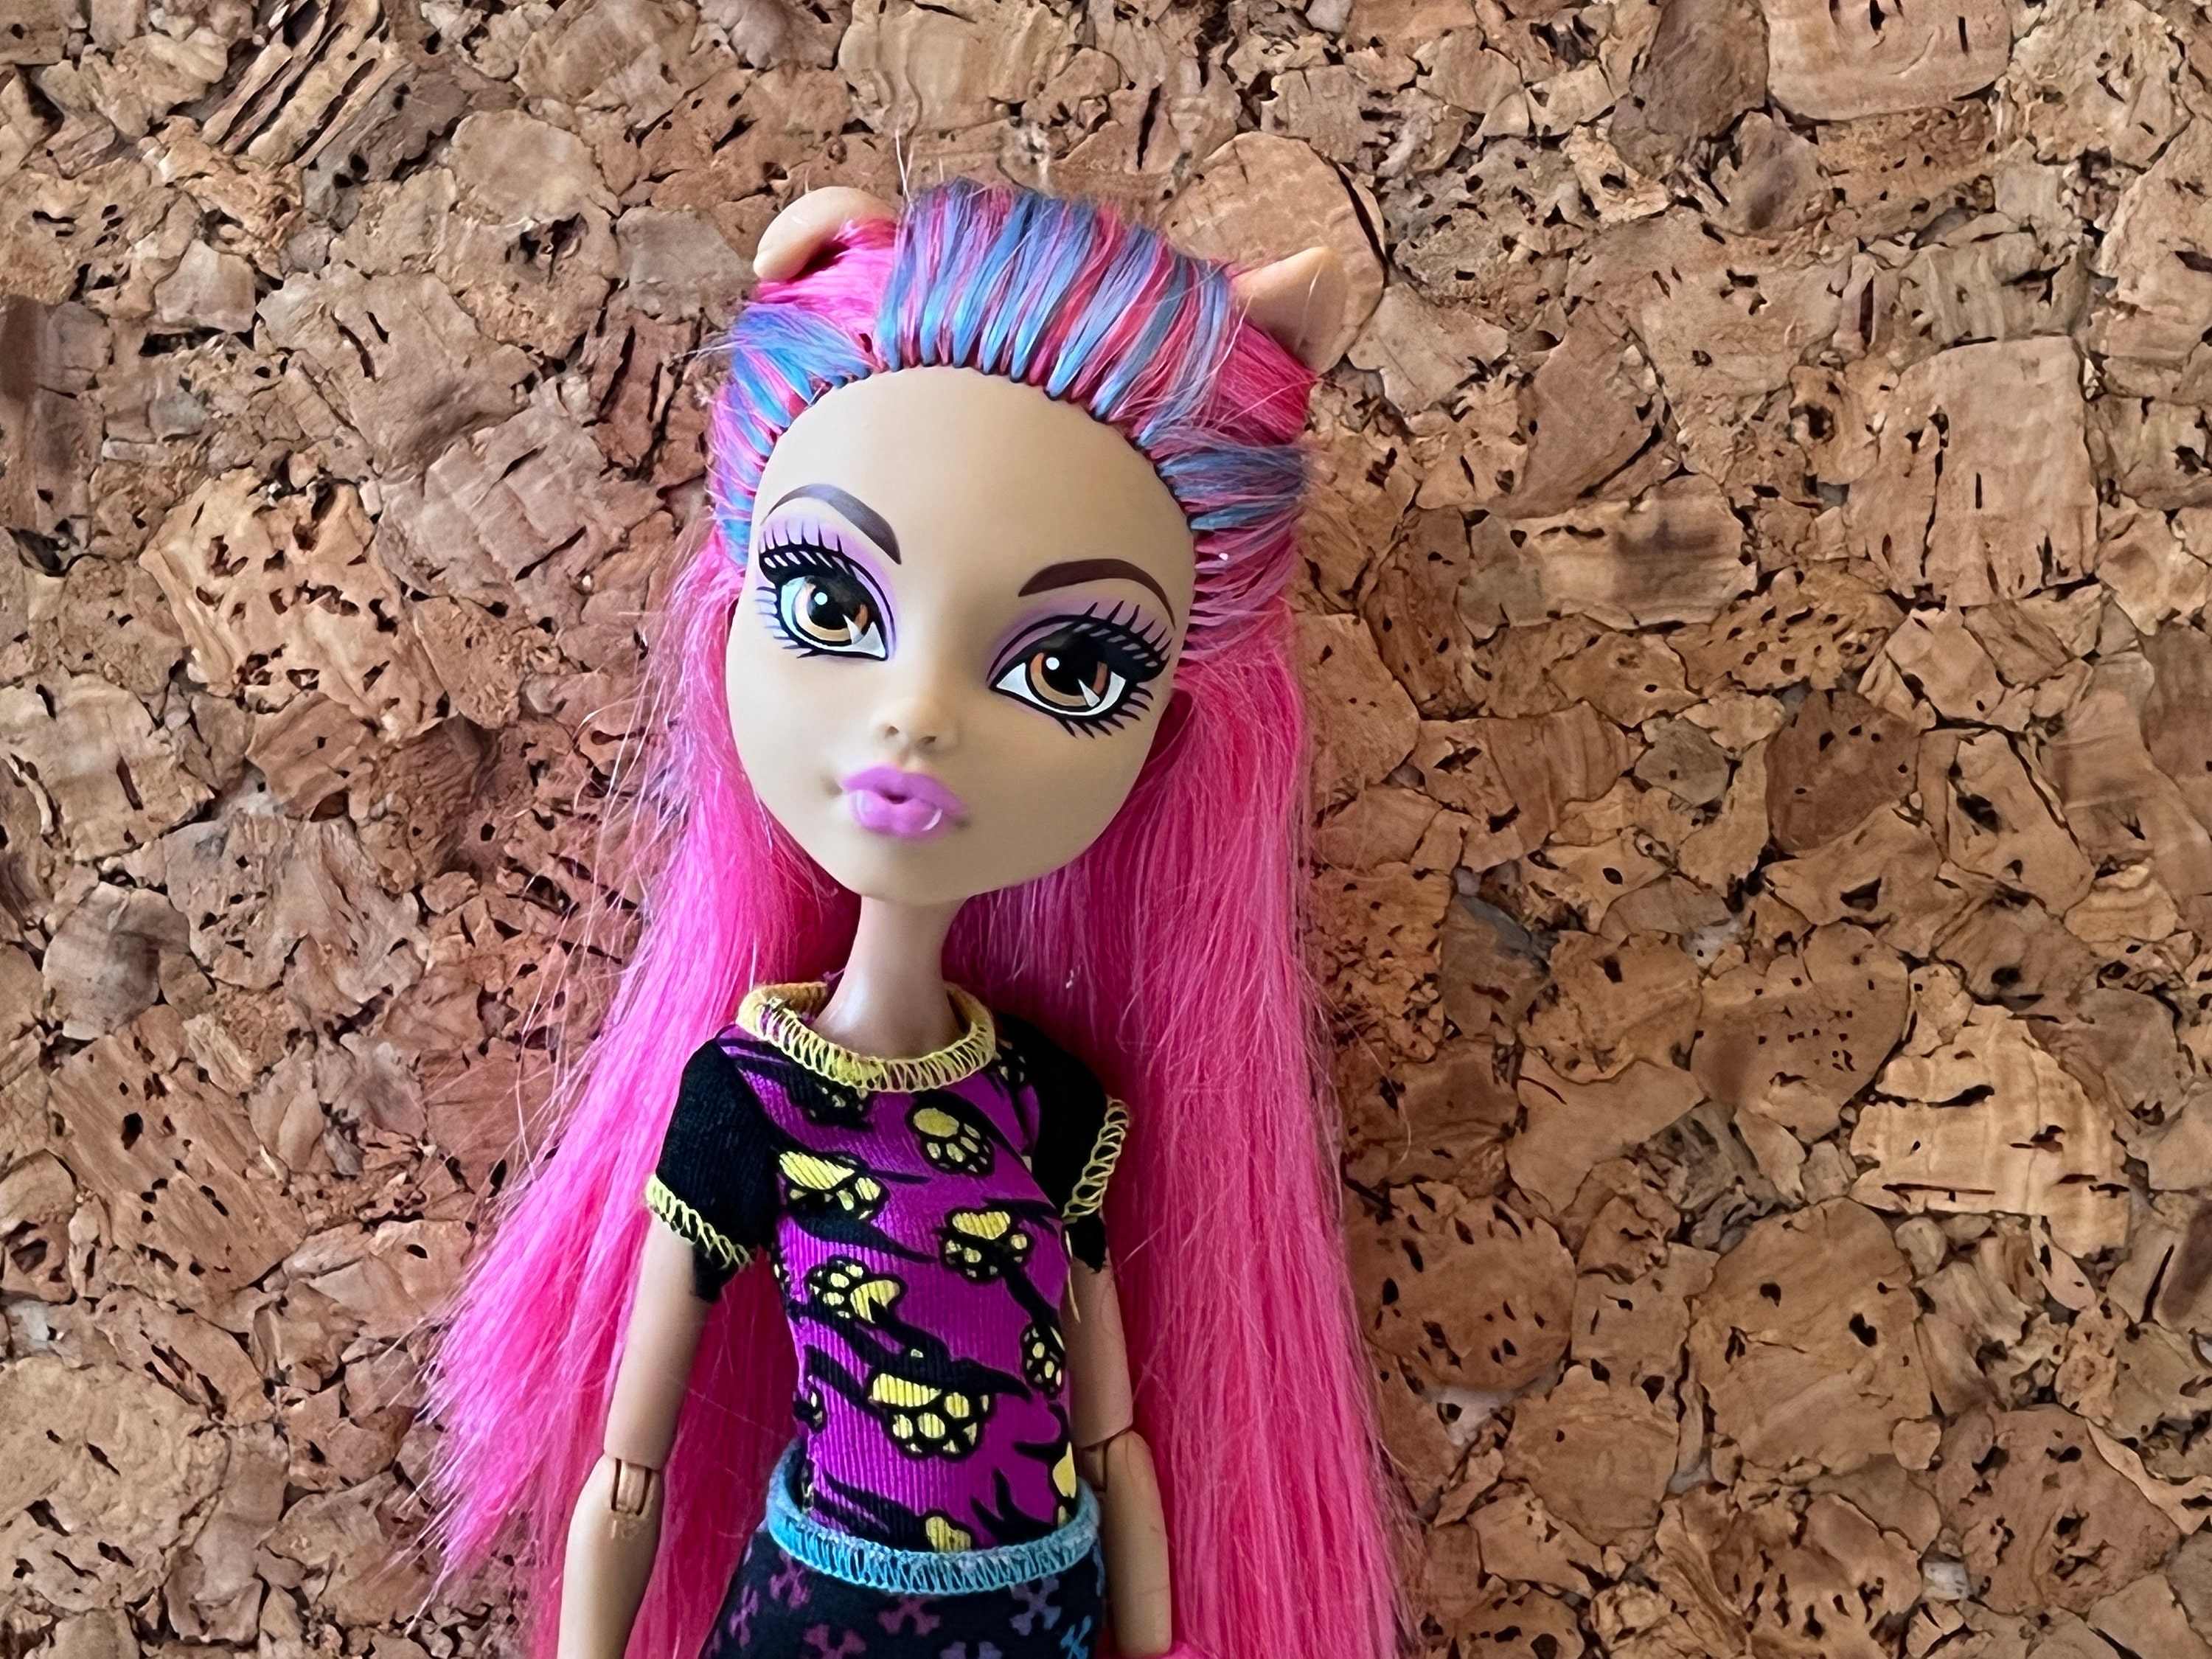 Monster High Abbey Bominable Scaris em Promoção na Americanas